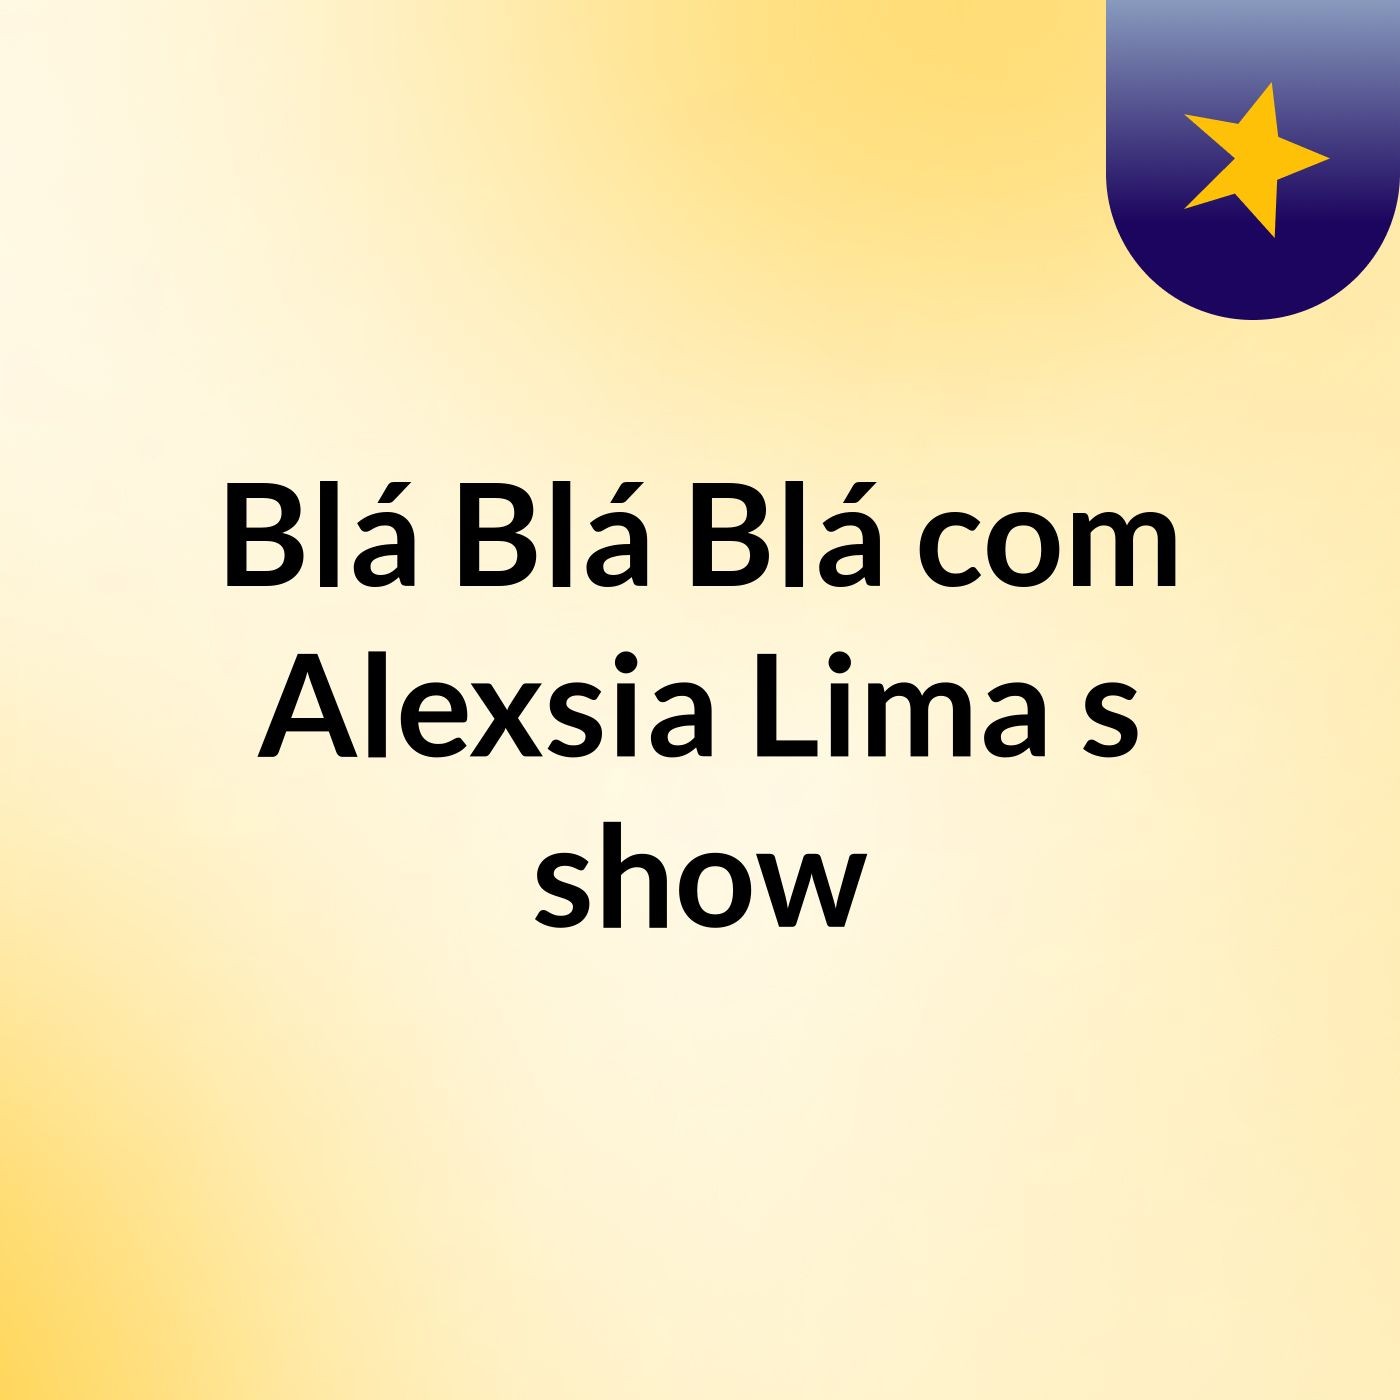 Blá Blá Blá com Alexsia Lima's show